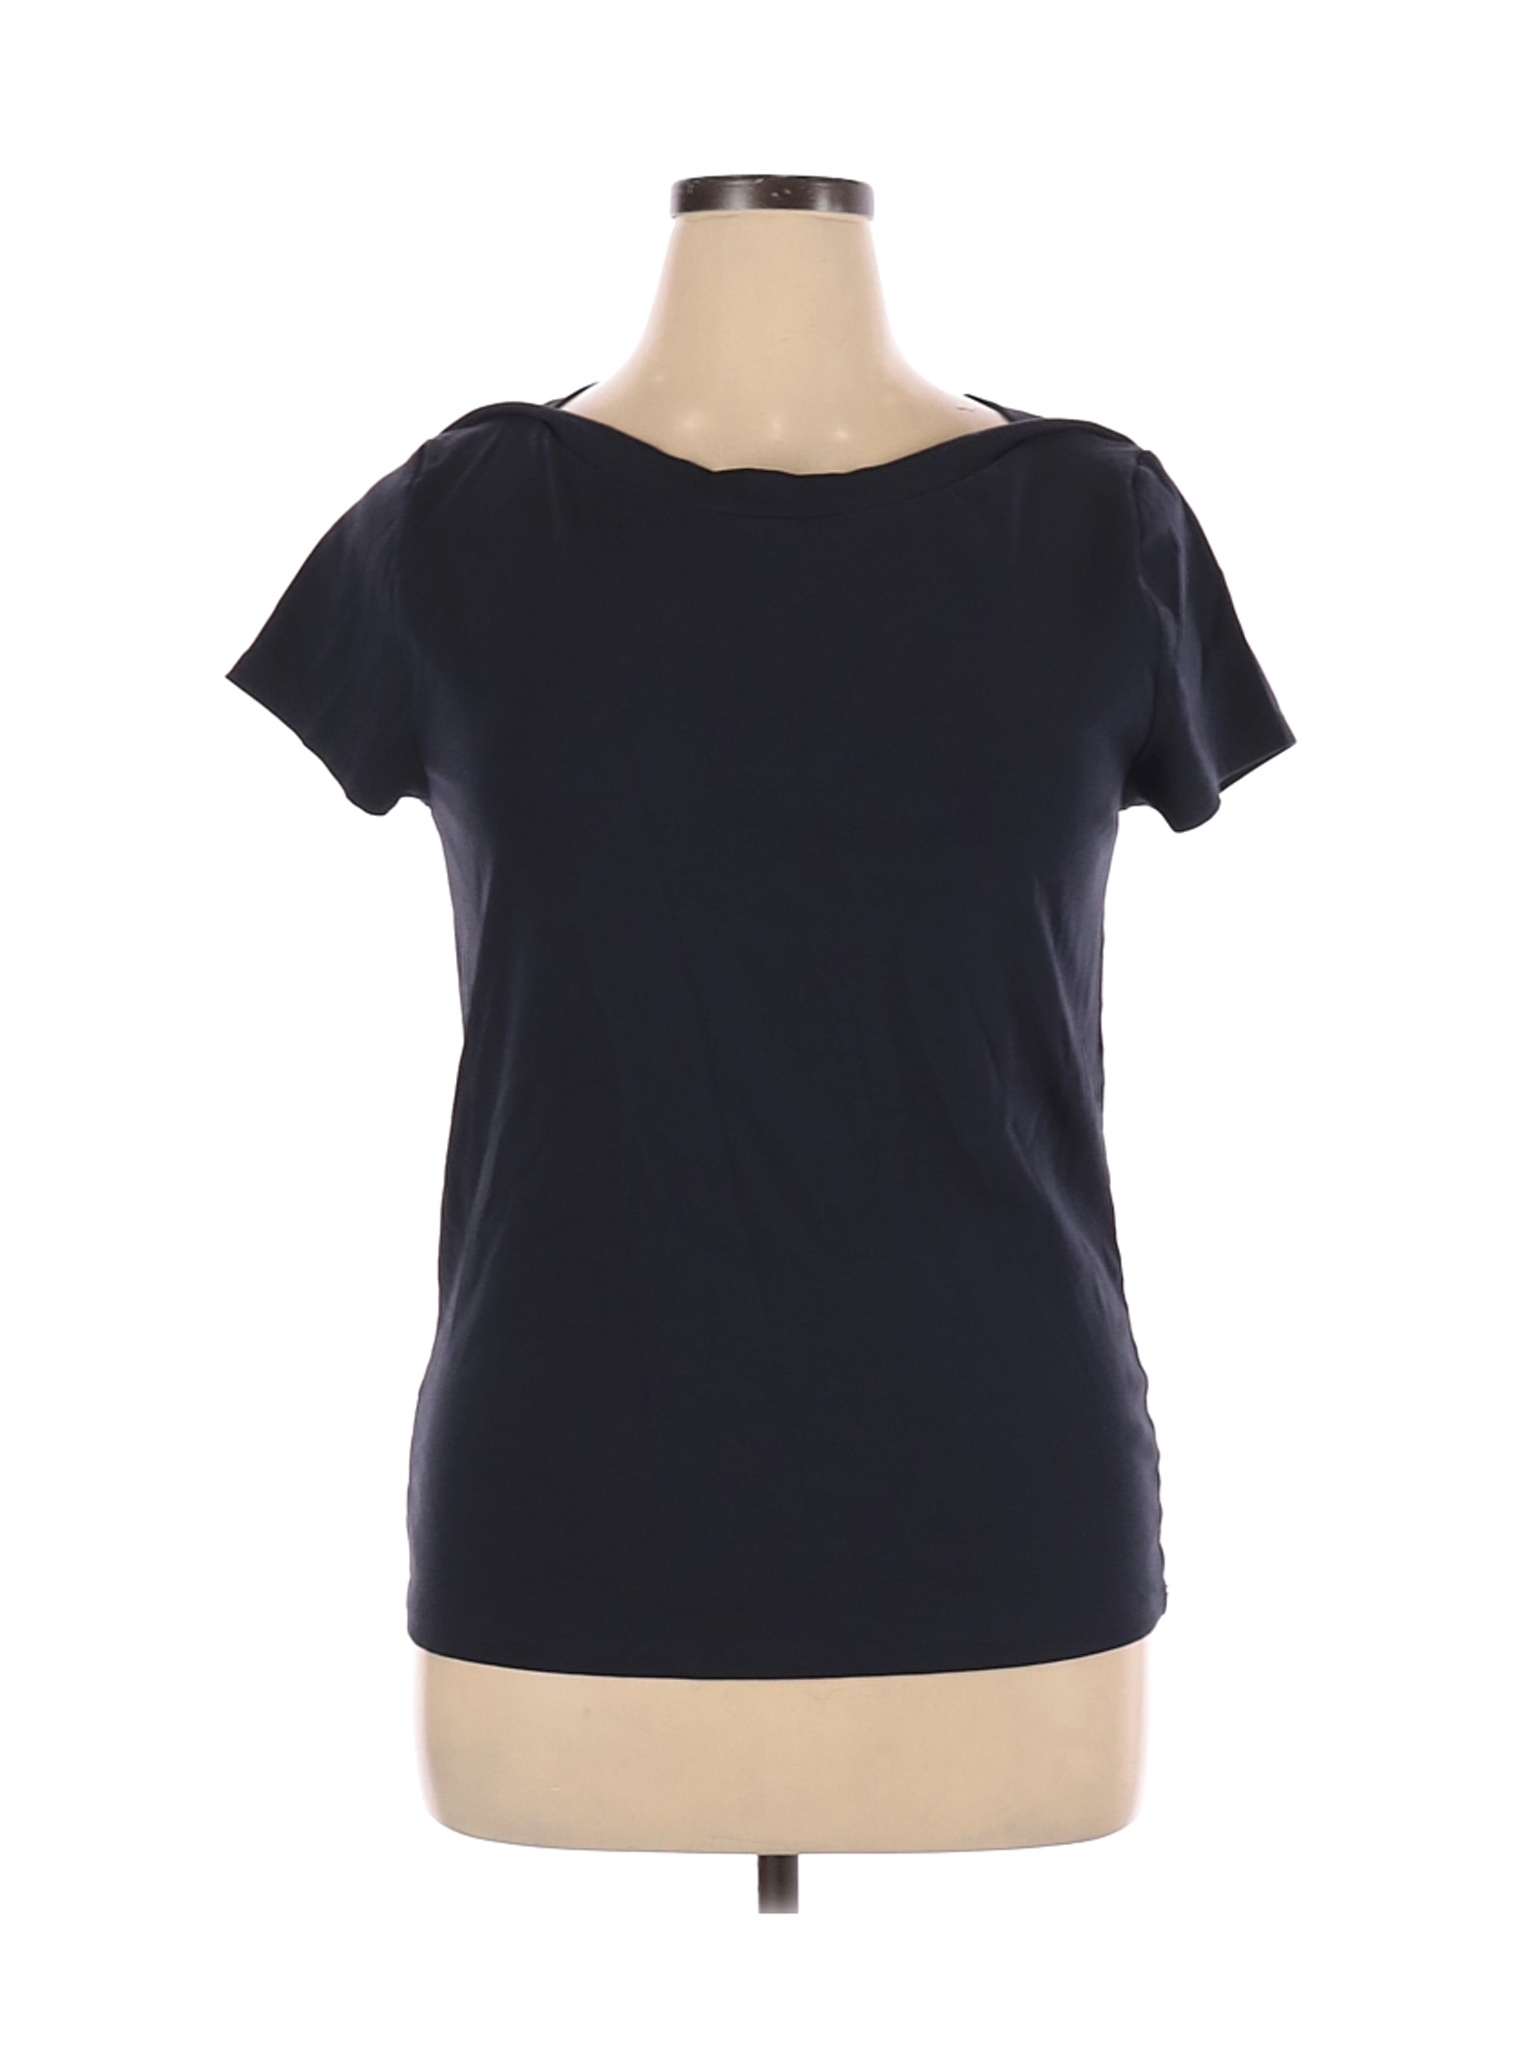 Ann Taylor Women Black Short Sleeve T-Shirt XL | eBay